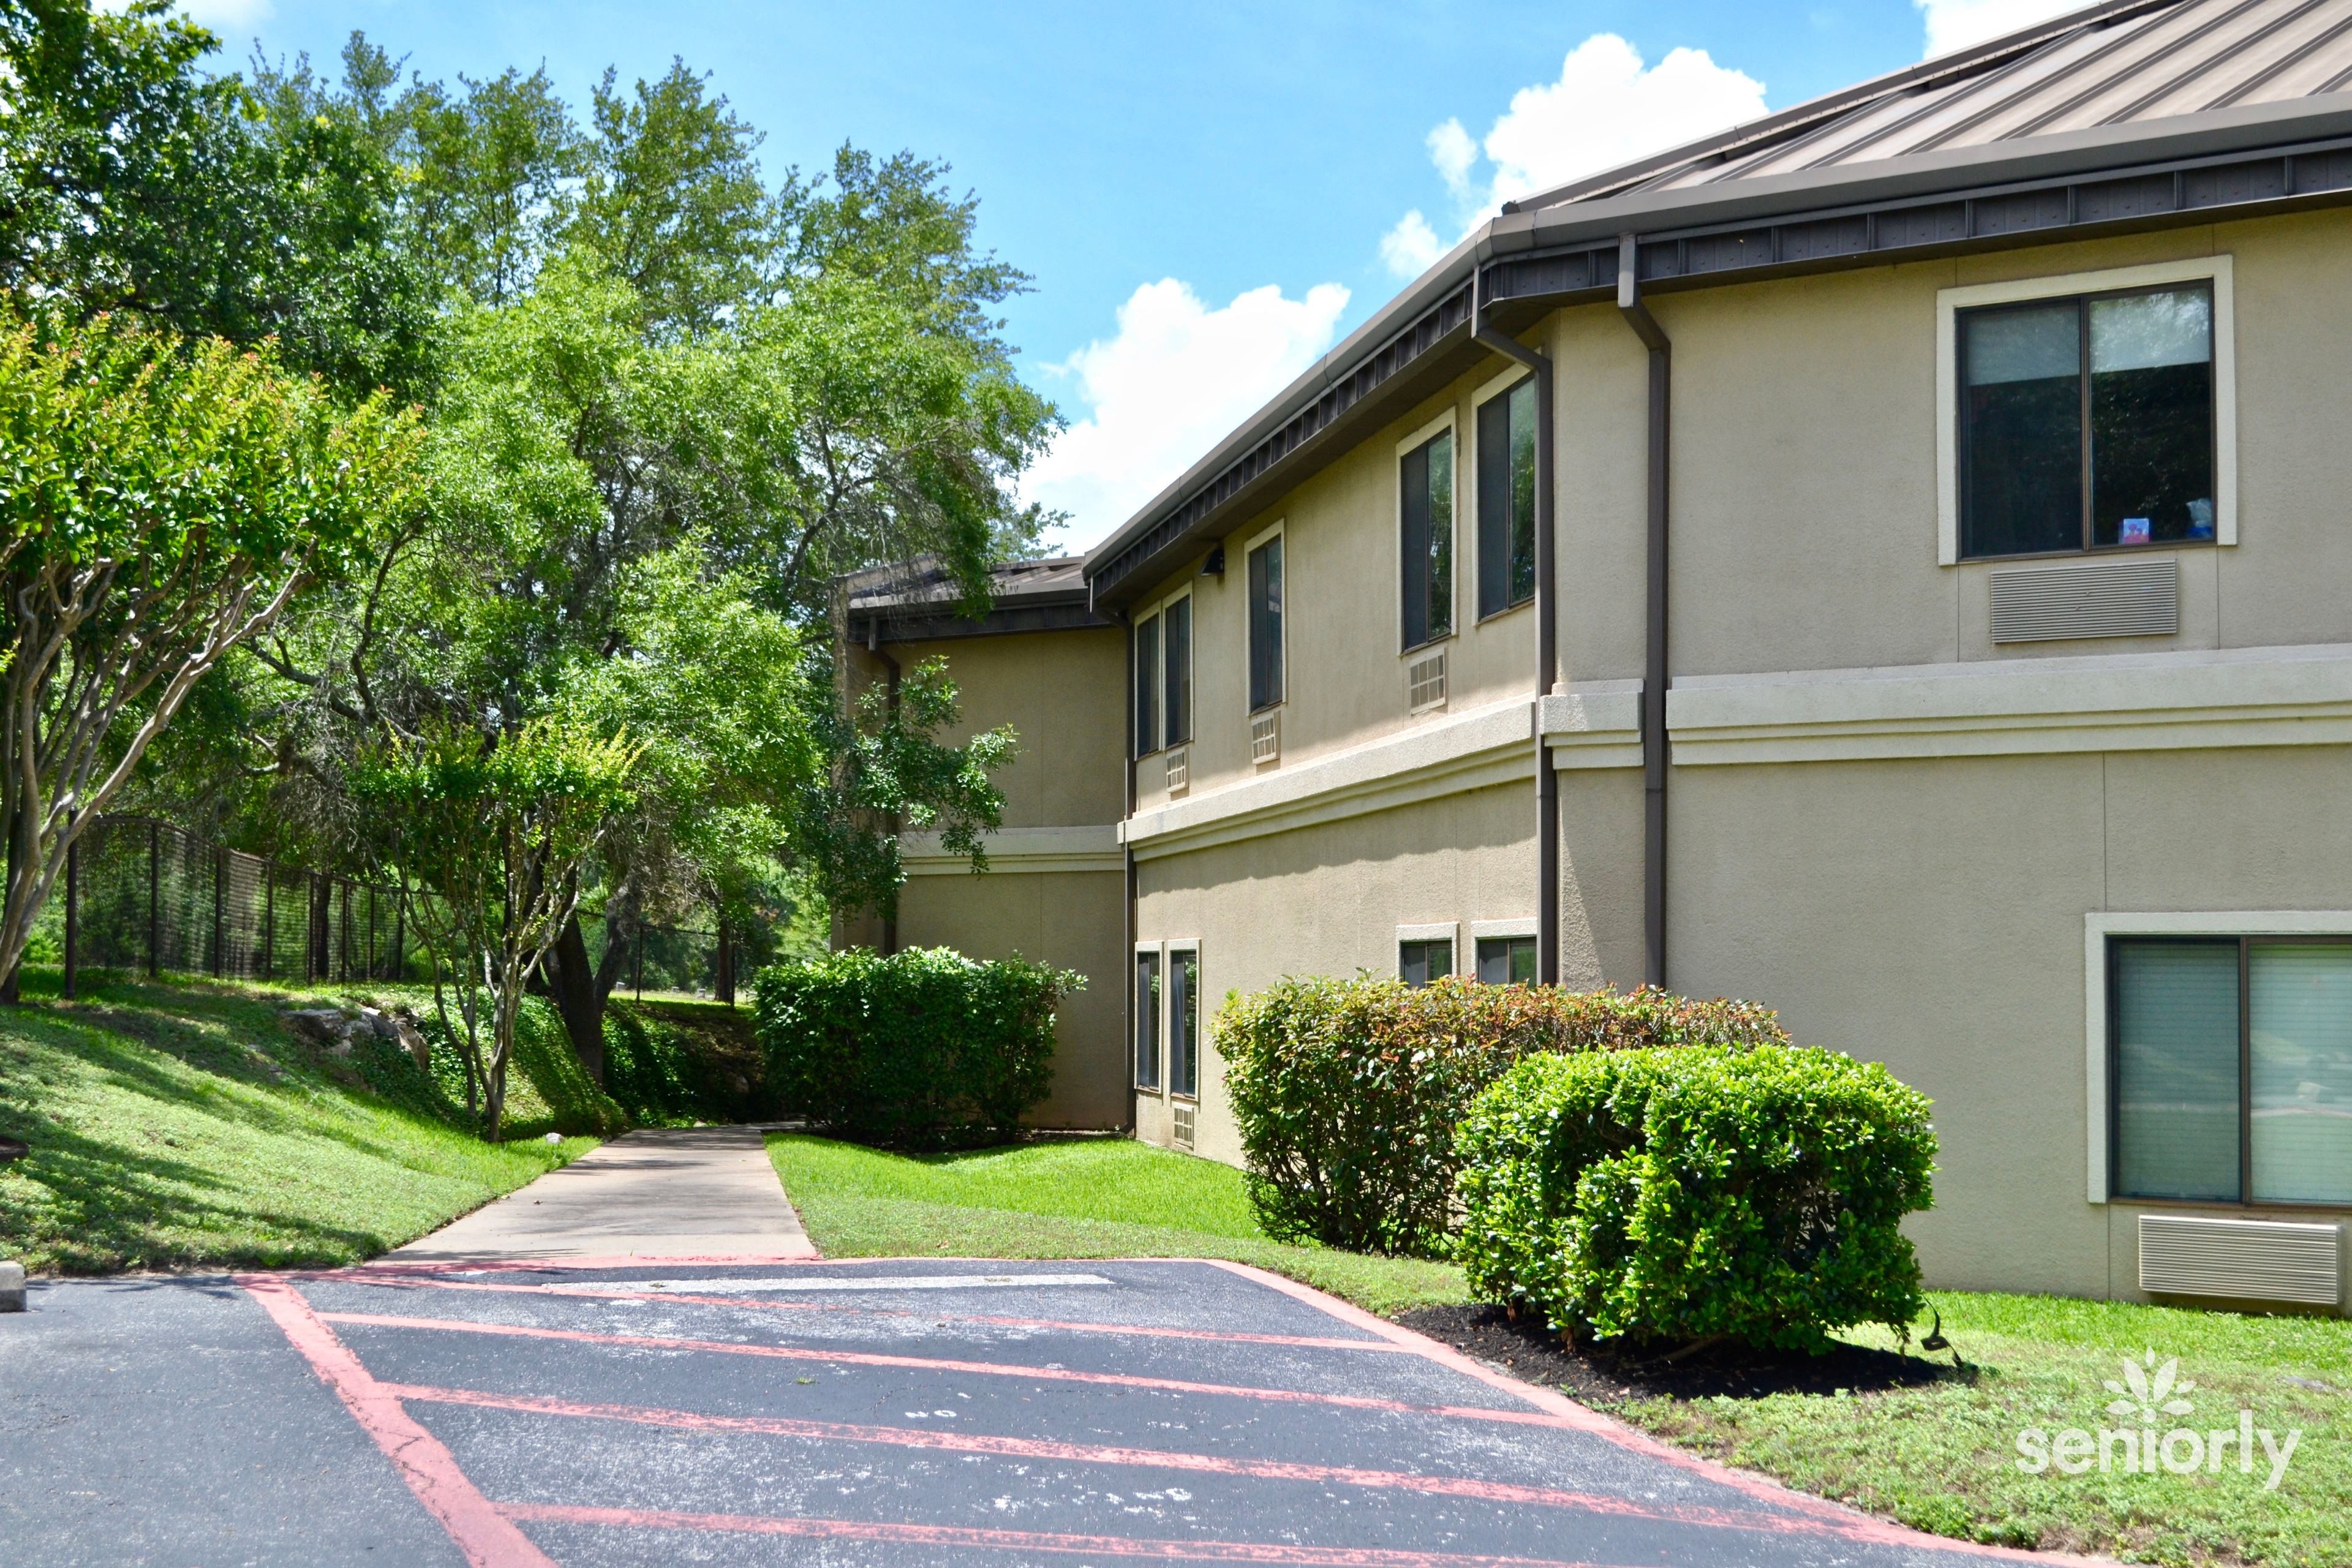 Austin's Heartland Health Care Center, a senior living community nestled in a lush suburban setting.